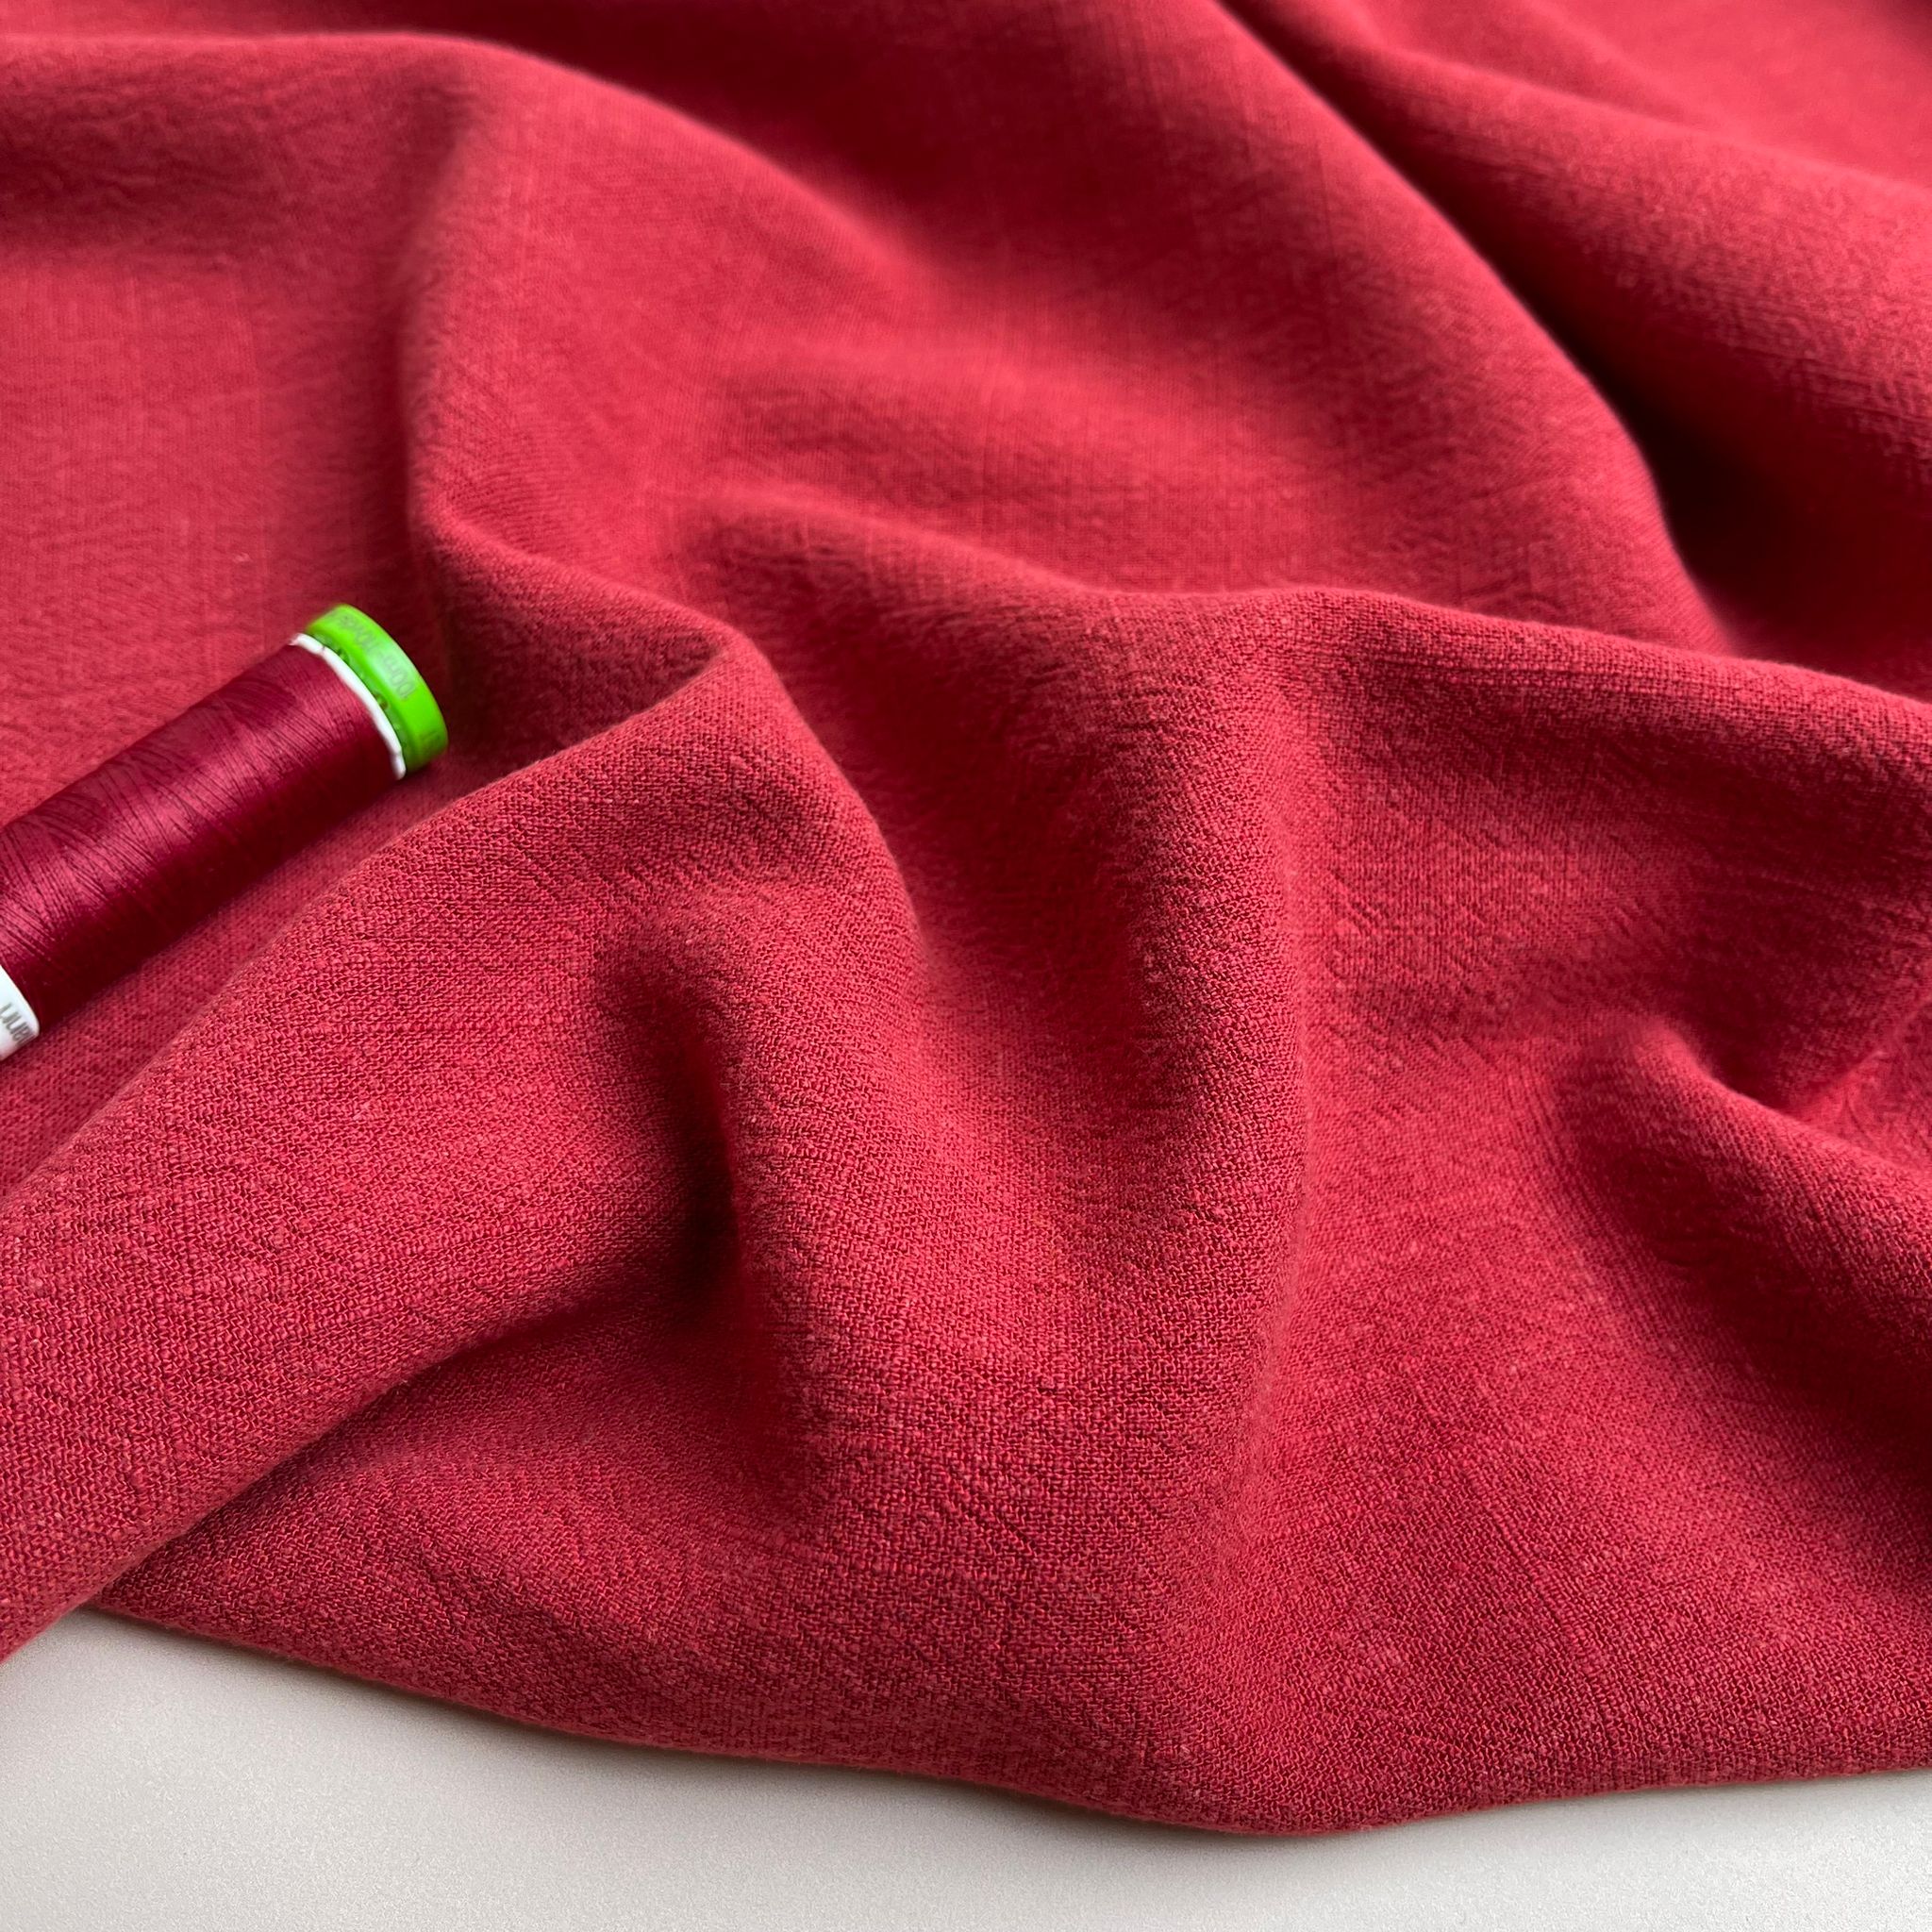 REMNANT 0.51 Metre - Flow Crimson Red Viscose Linen Blend Dress Fabric